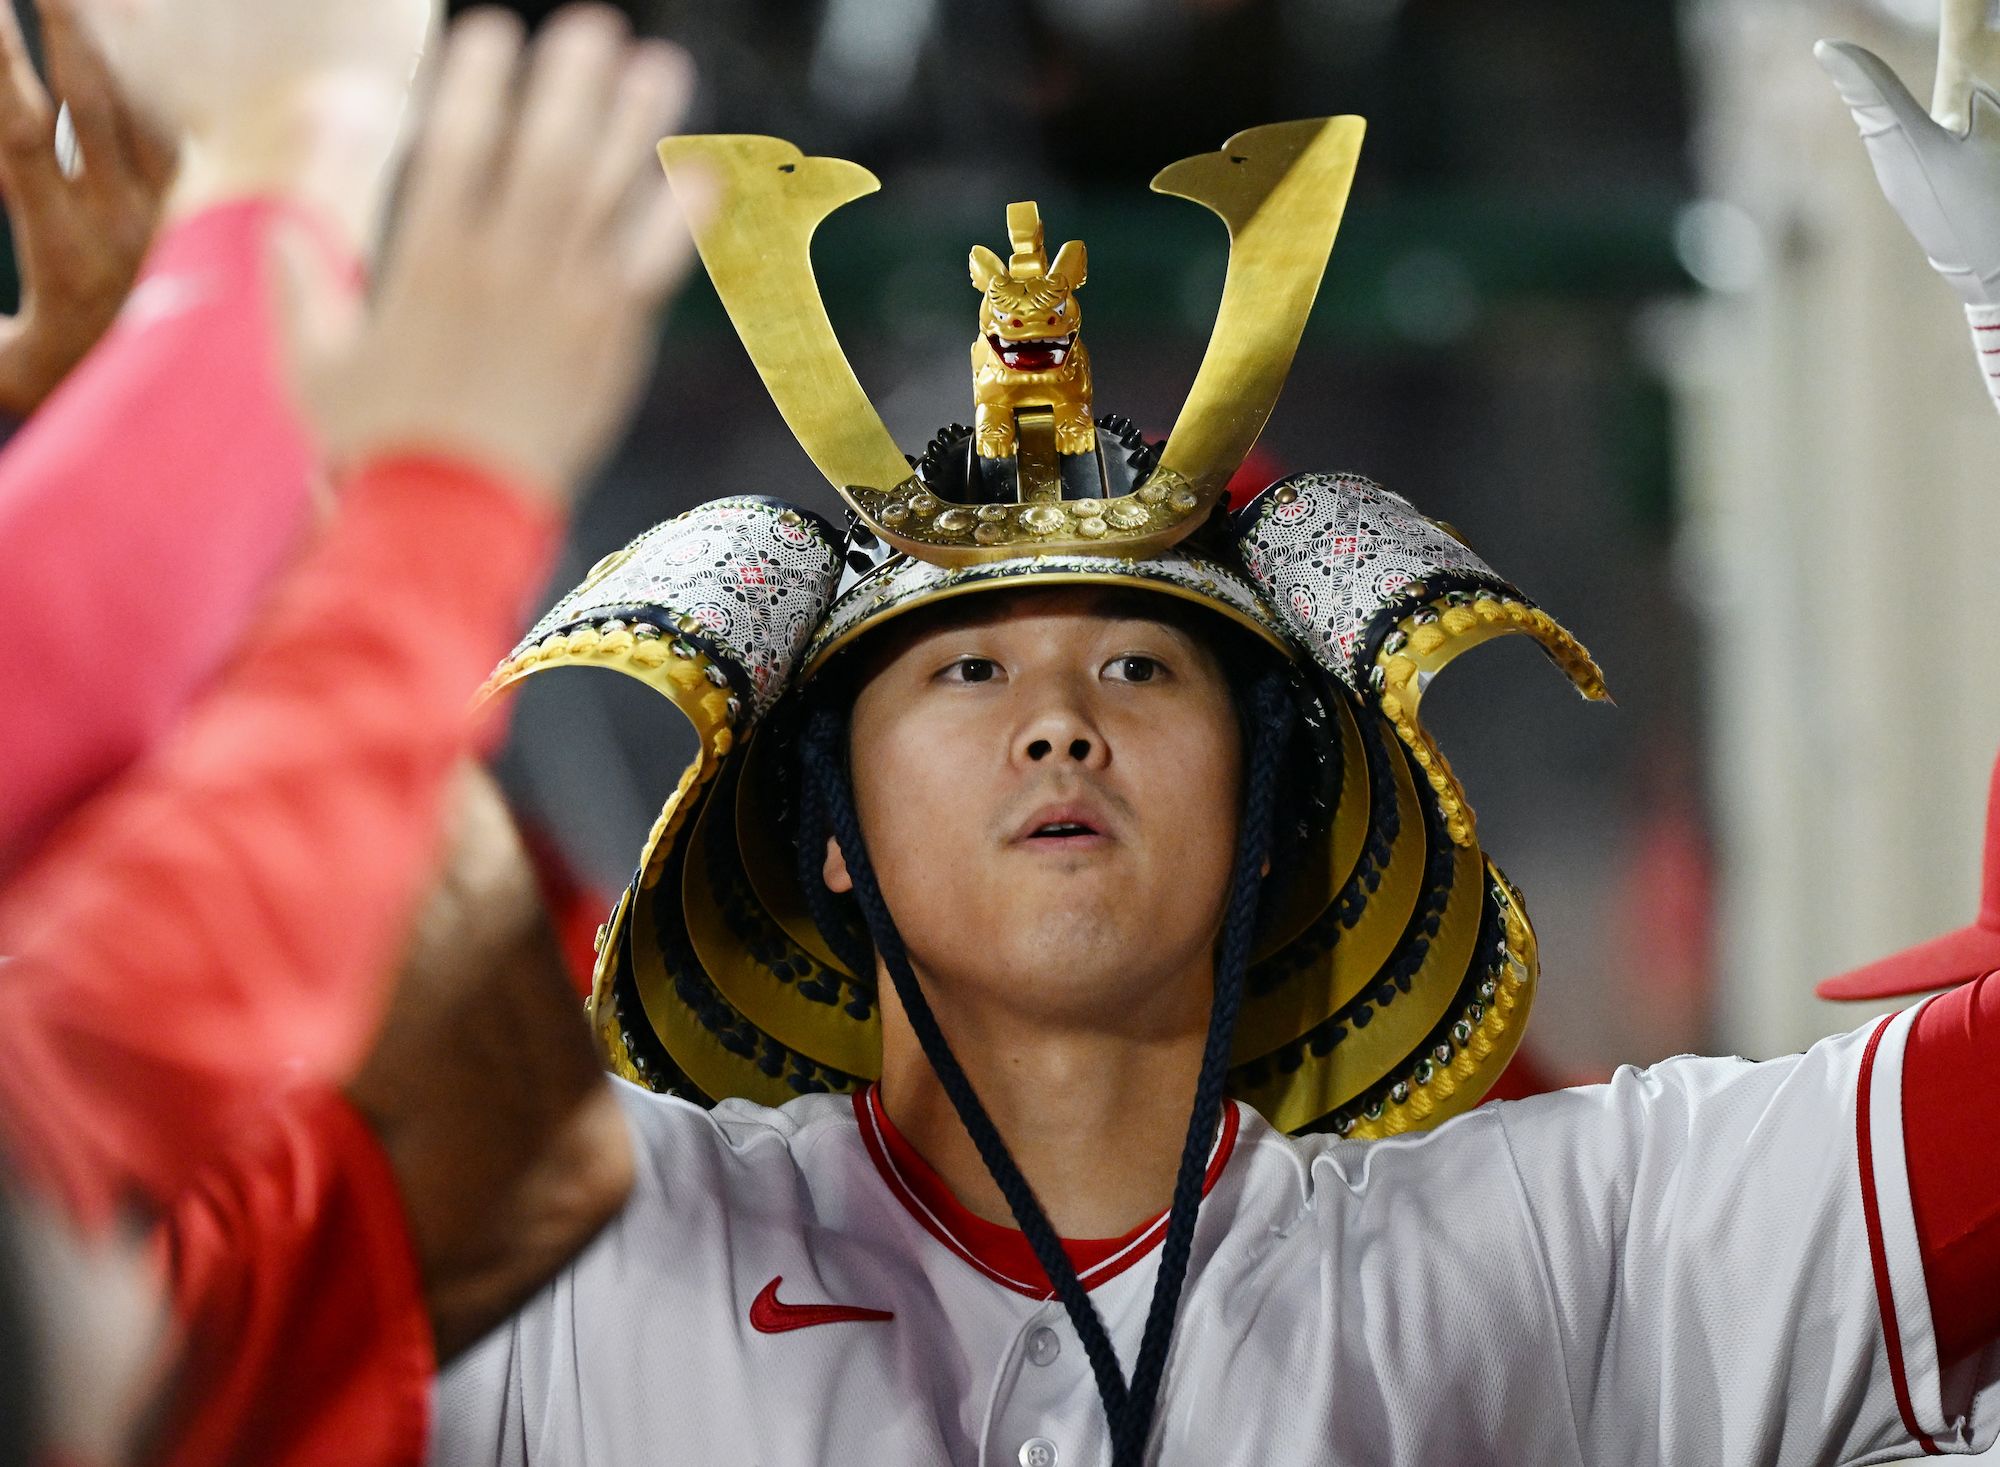 MLB: Shohei Ohtani crushes biggest home run of the season